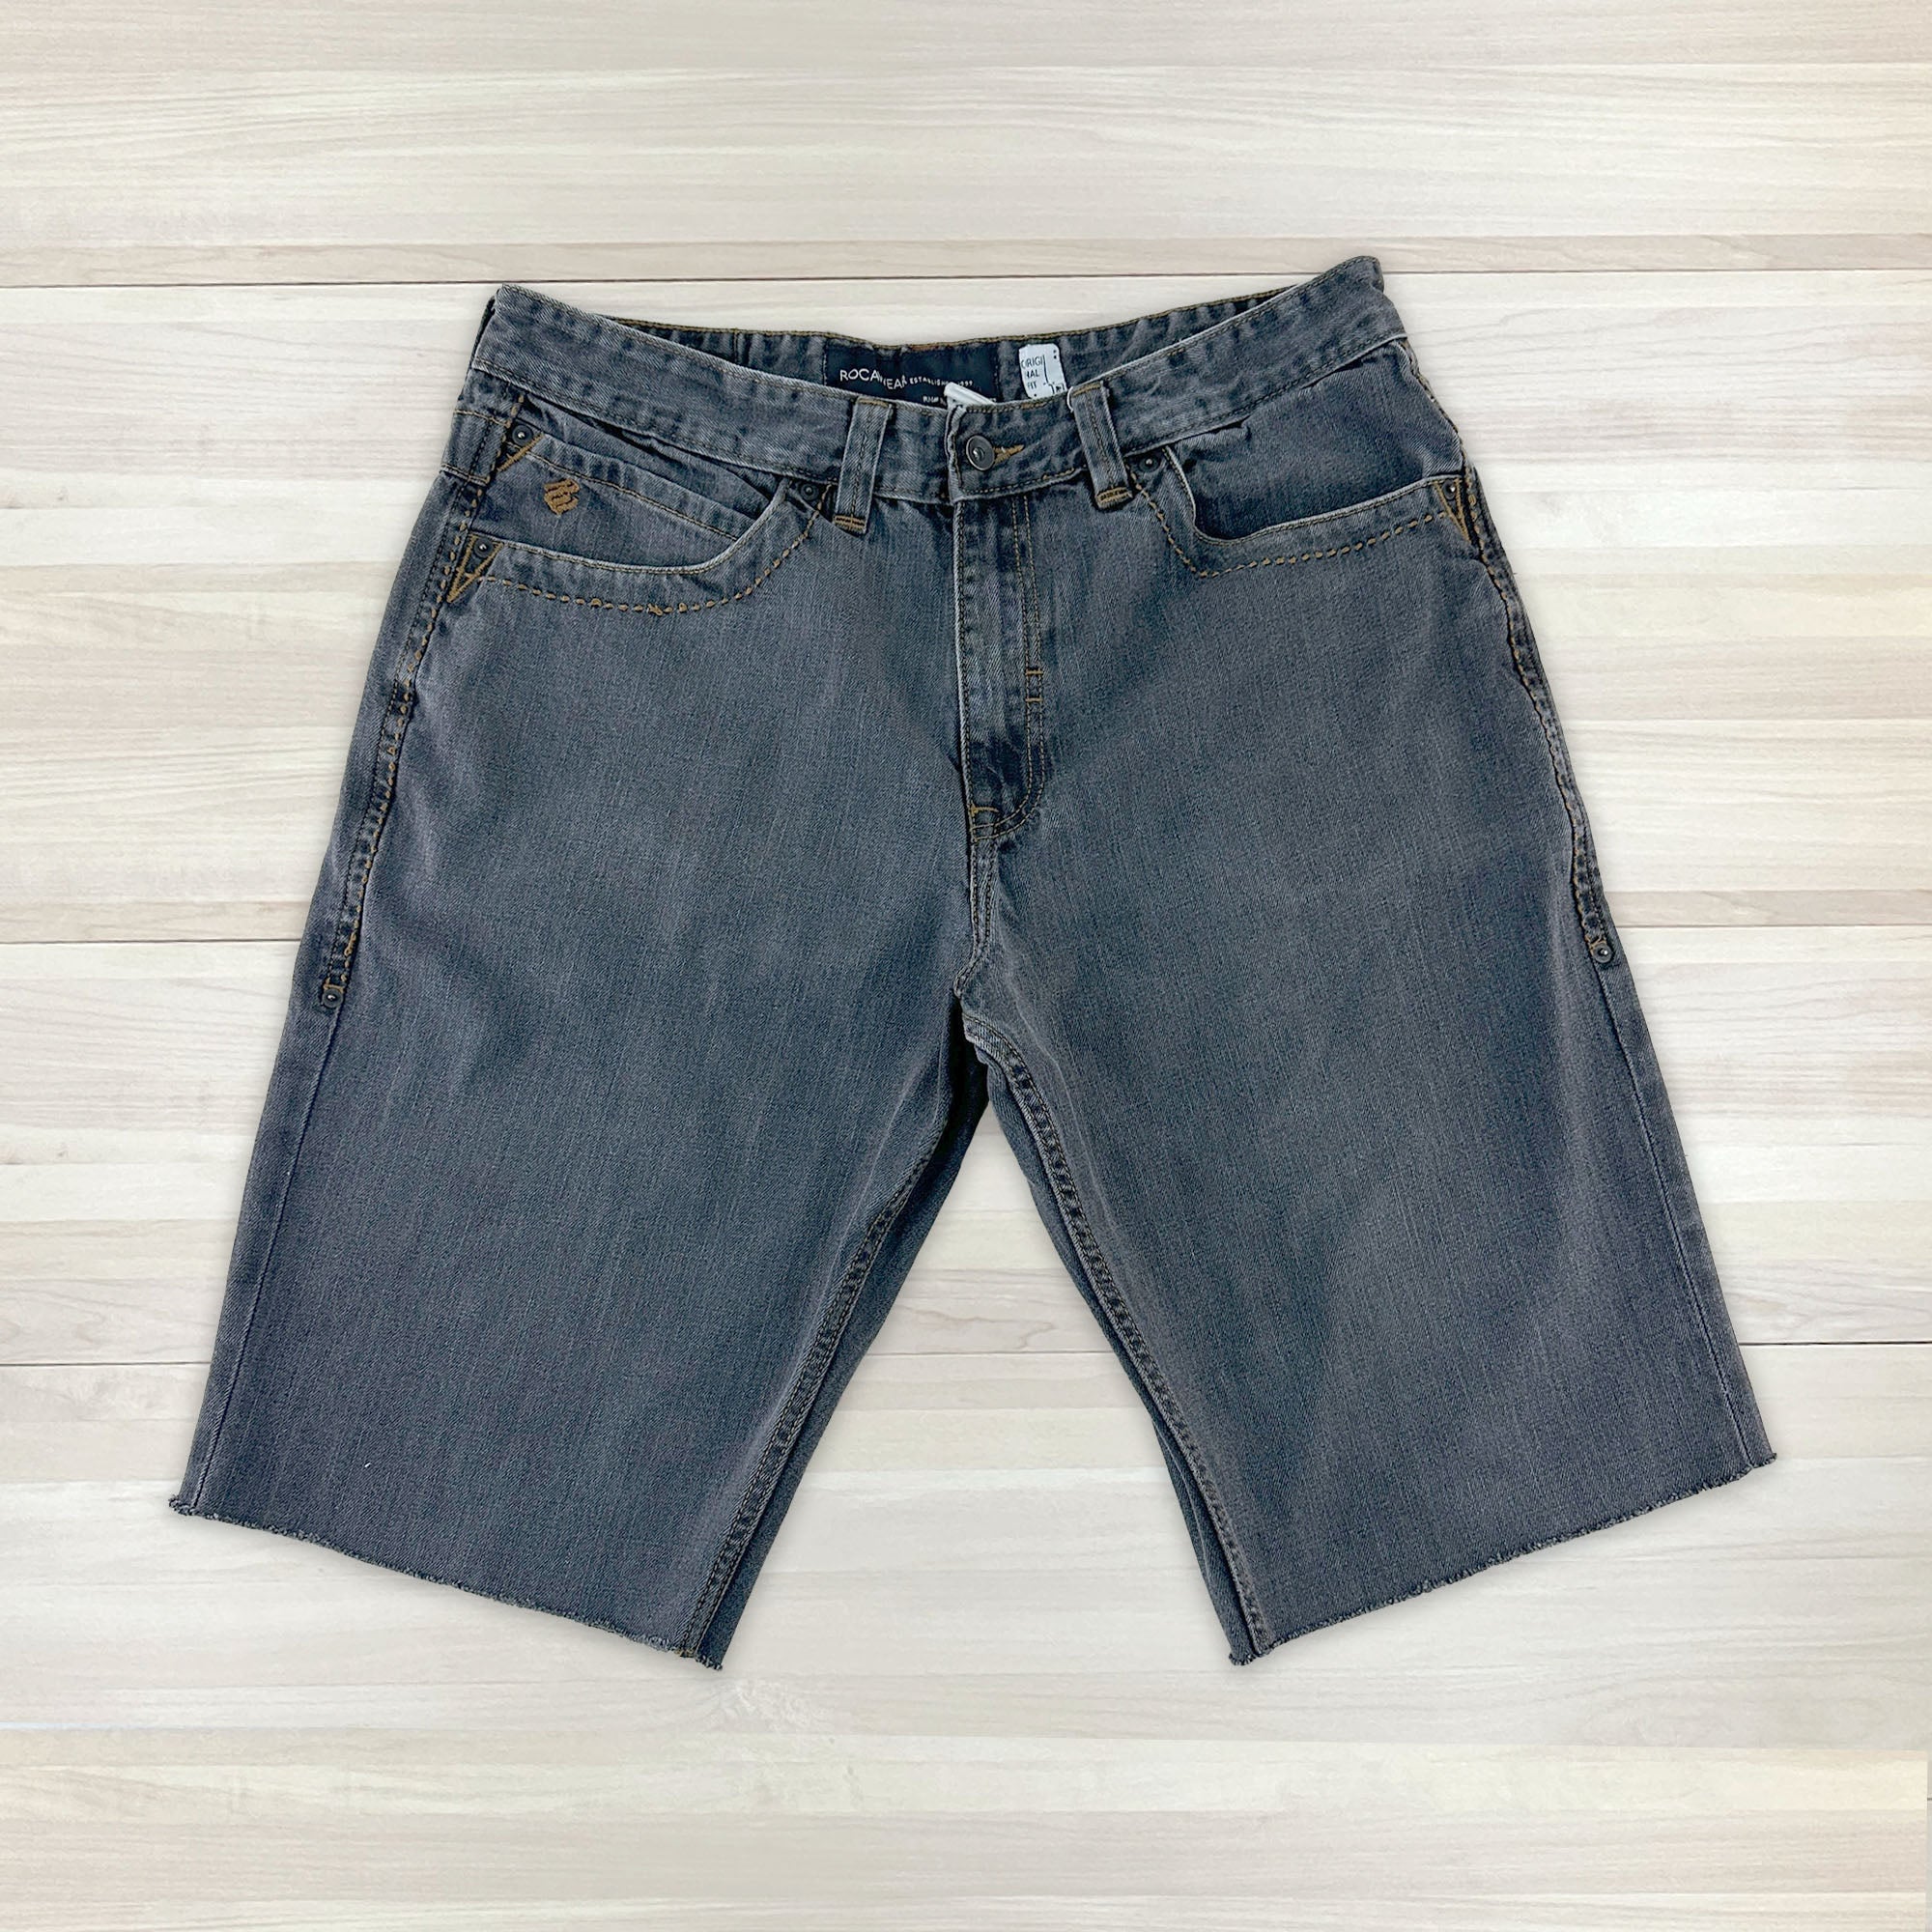 Men's Vintage Blue Rocawear Baggy Cutoff Shorts - Measures 36x13-1